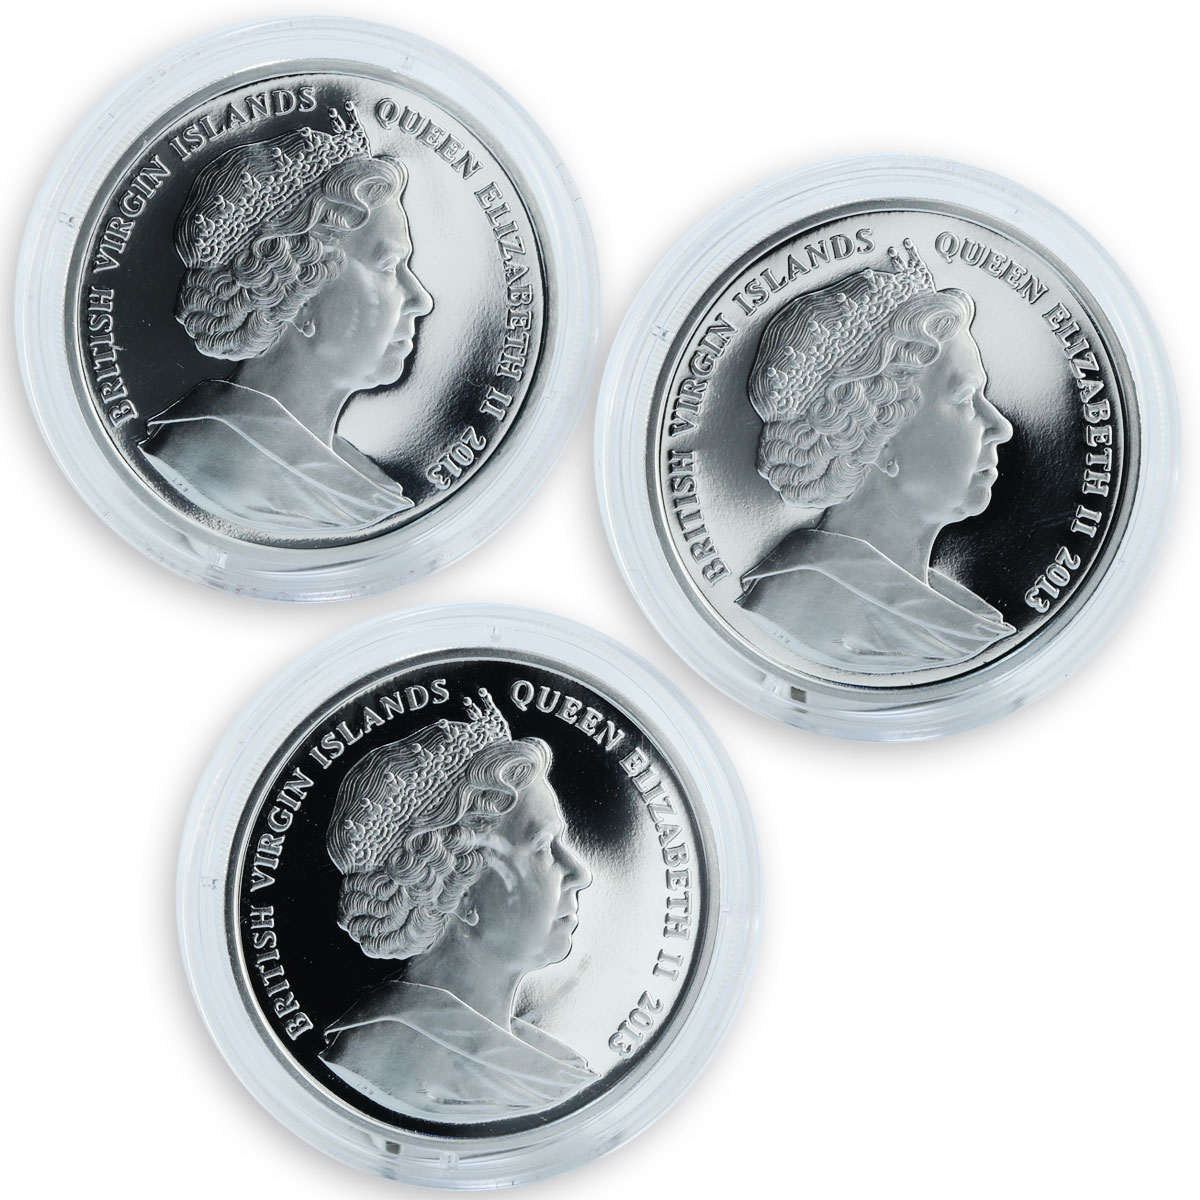 British Virgin Islands 10 dollars set of 3 coins Legendary Weapons proof 2013